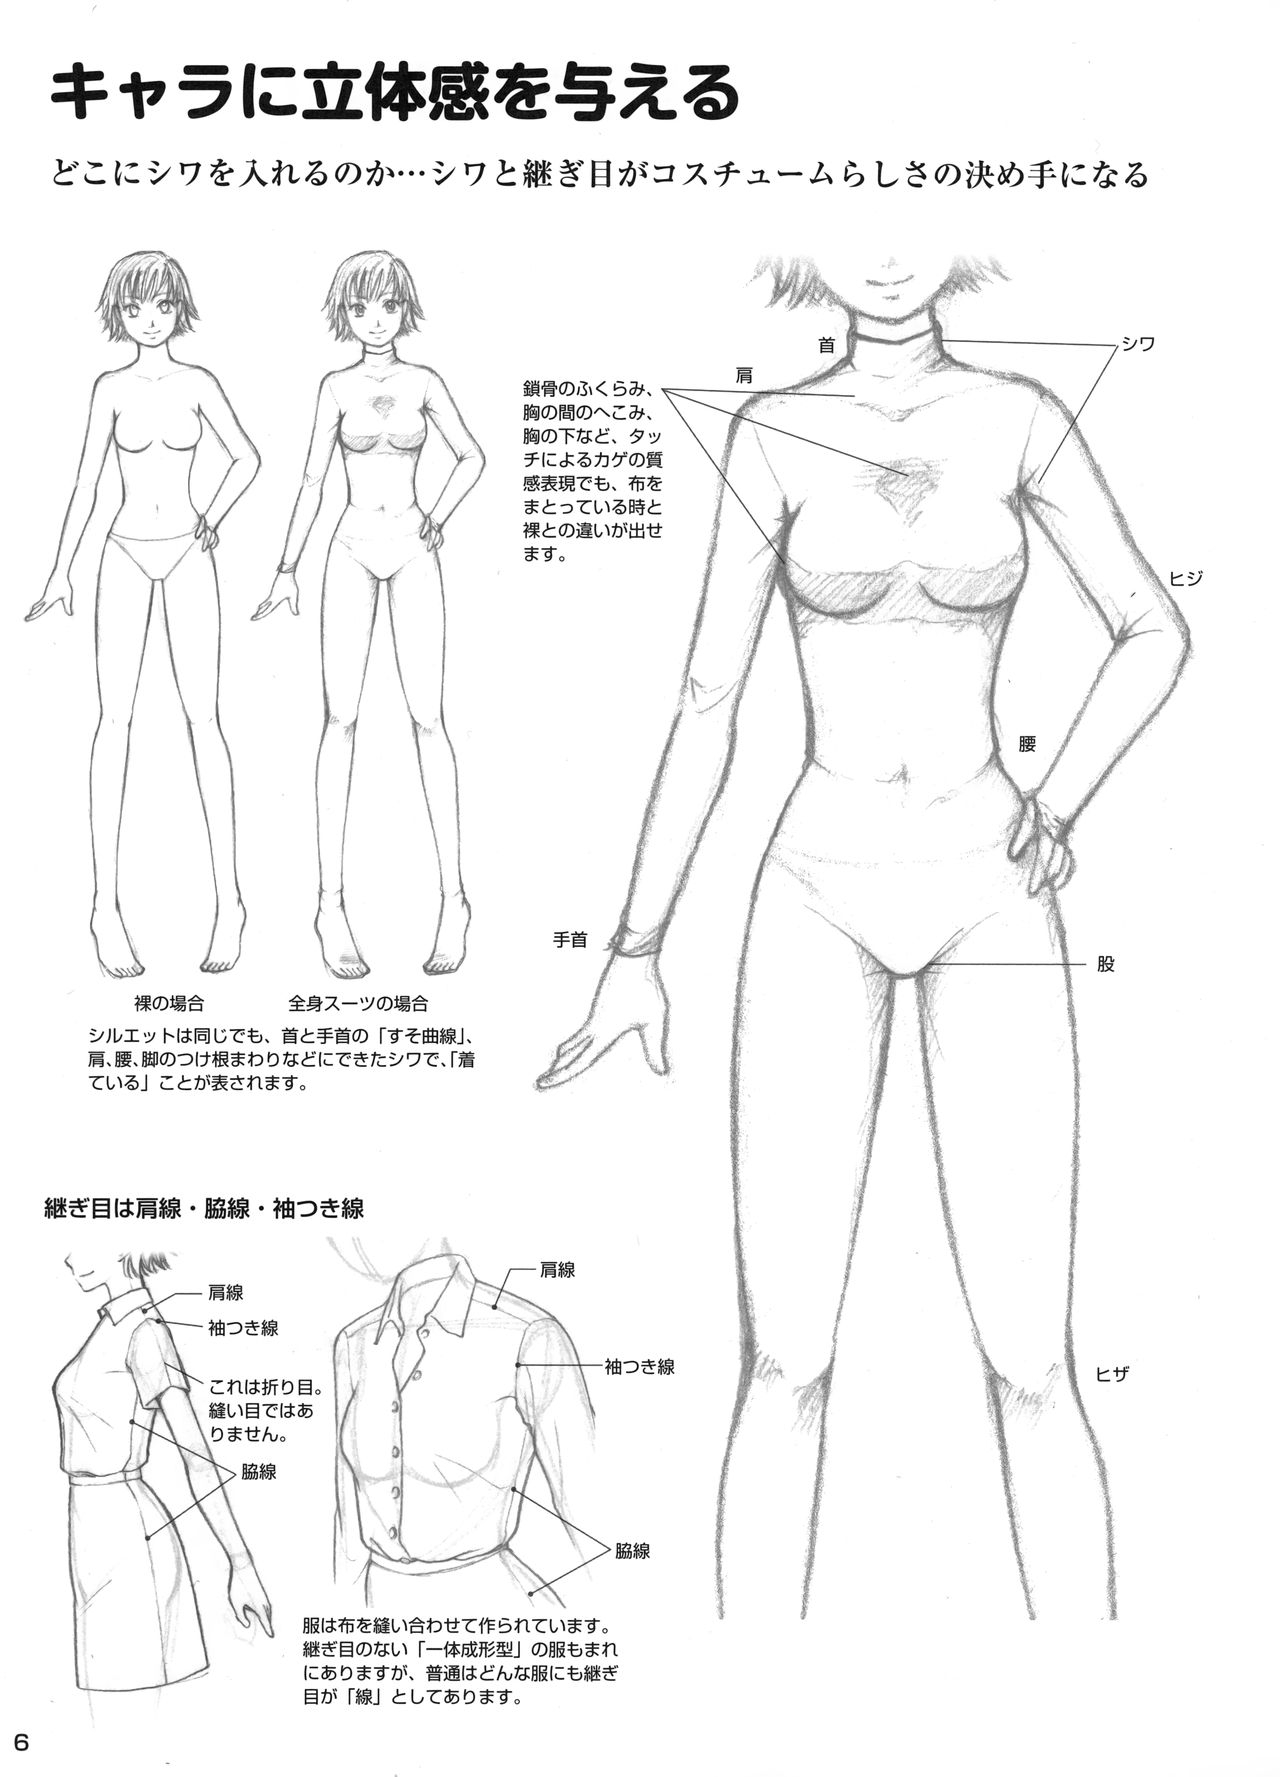 Manga no Kiso Dessin - Onnanoko Costume hen 6